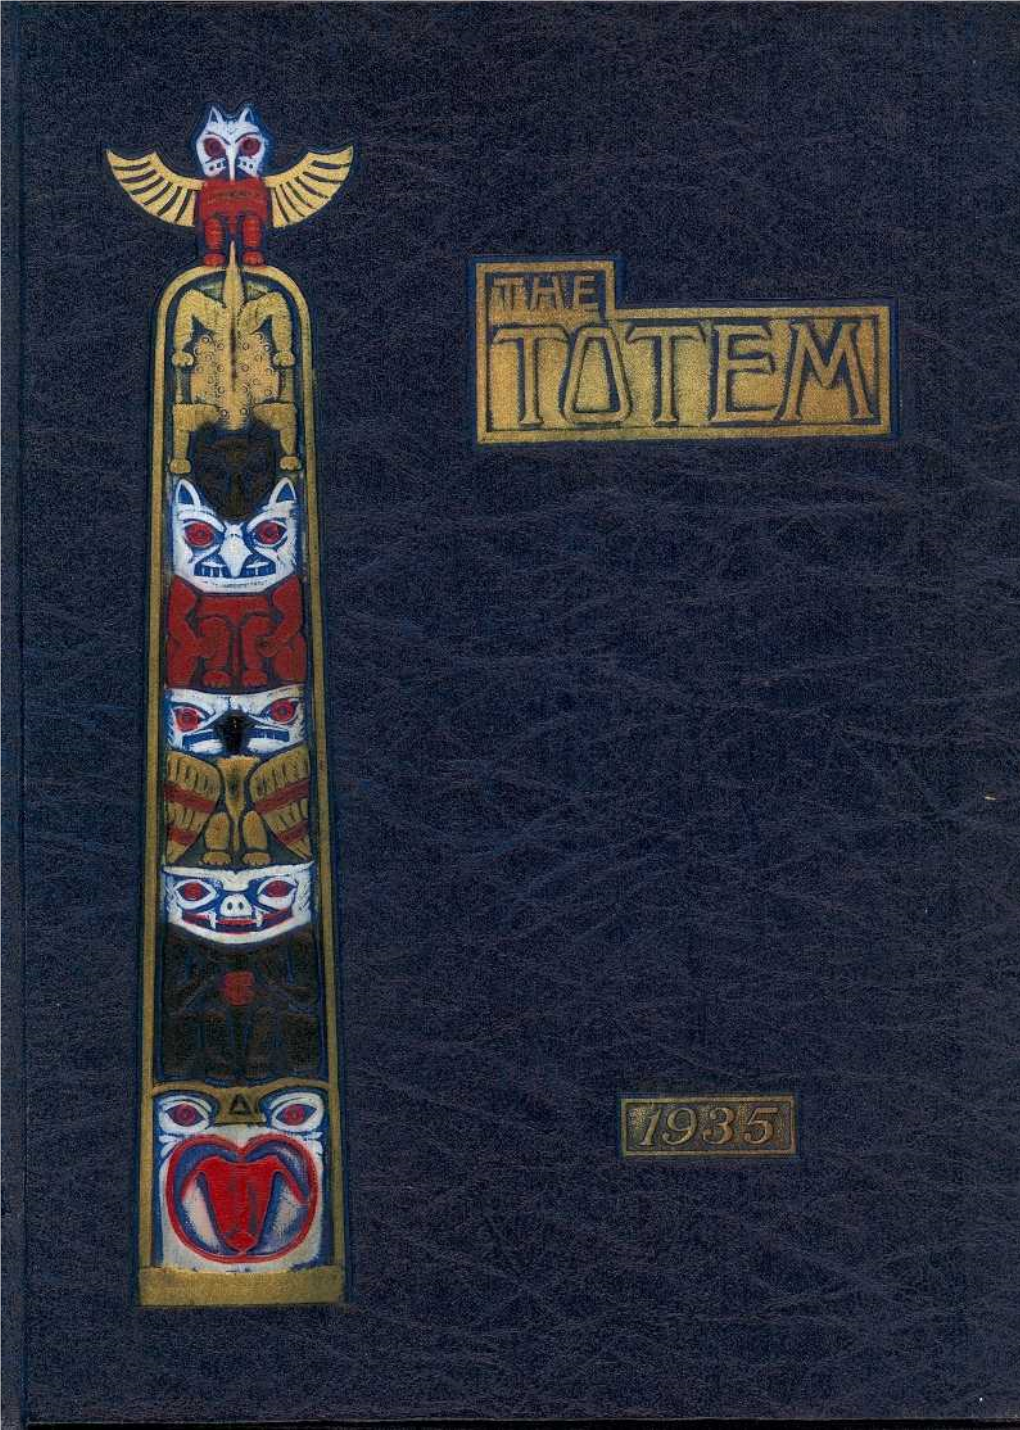 1935 Totem.Pdf